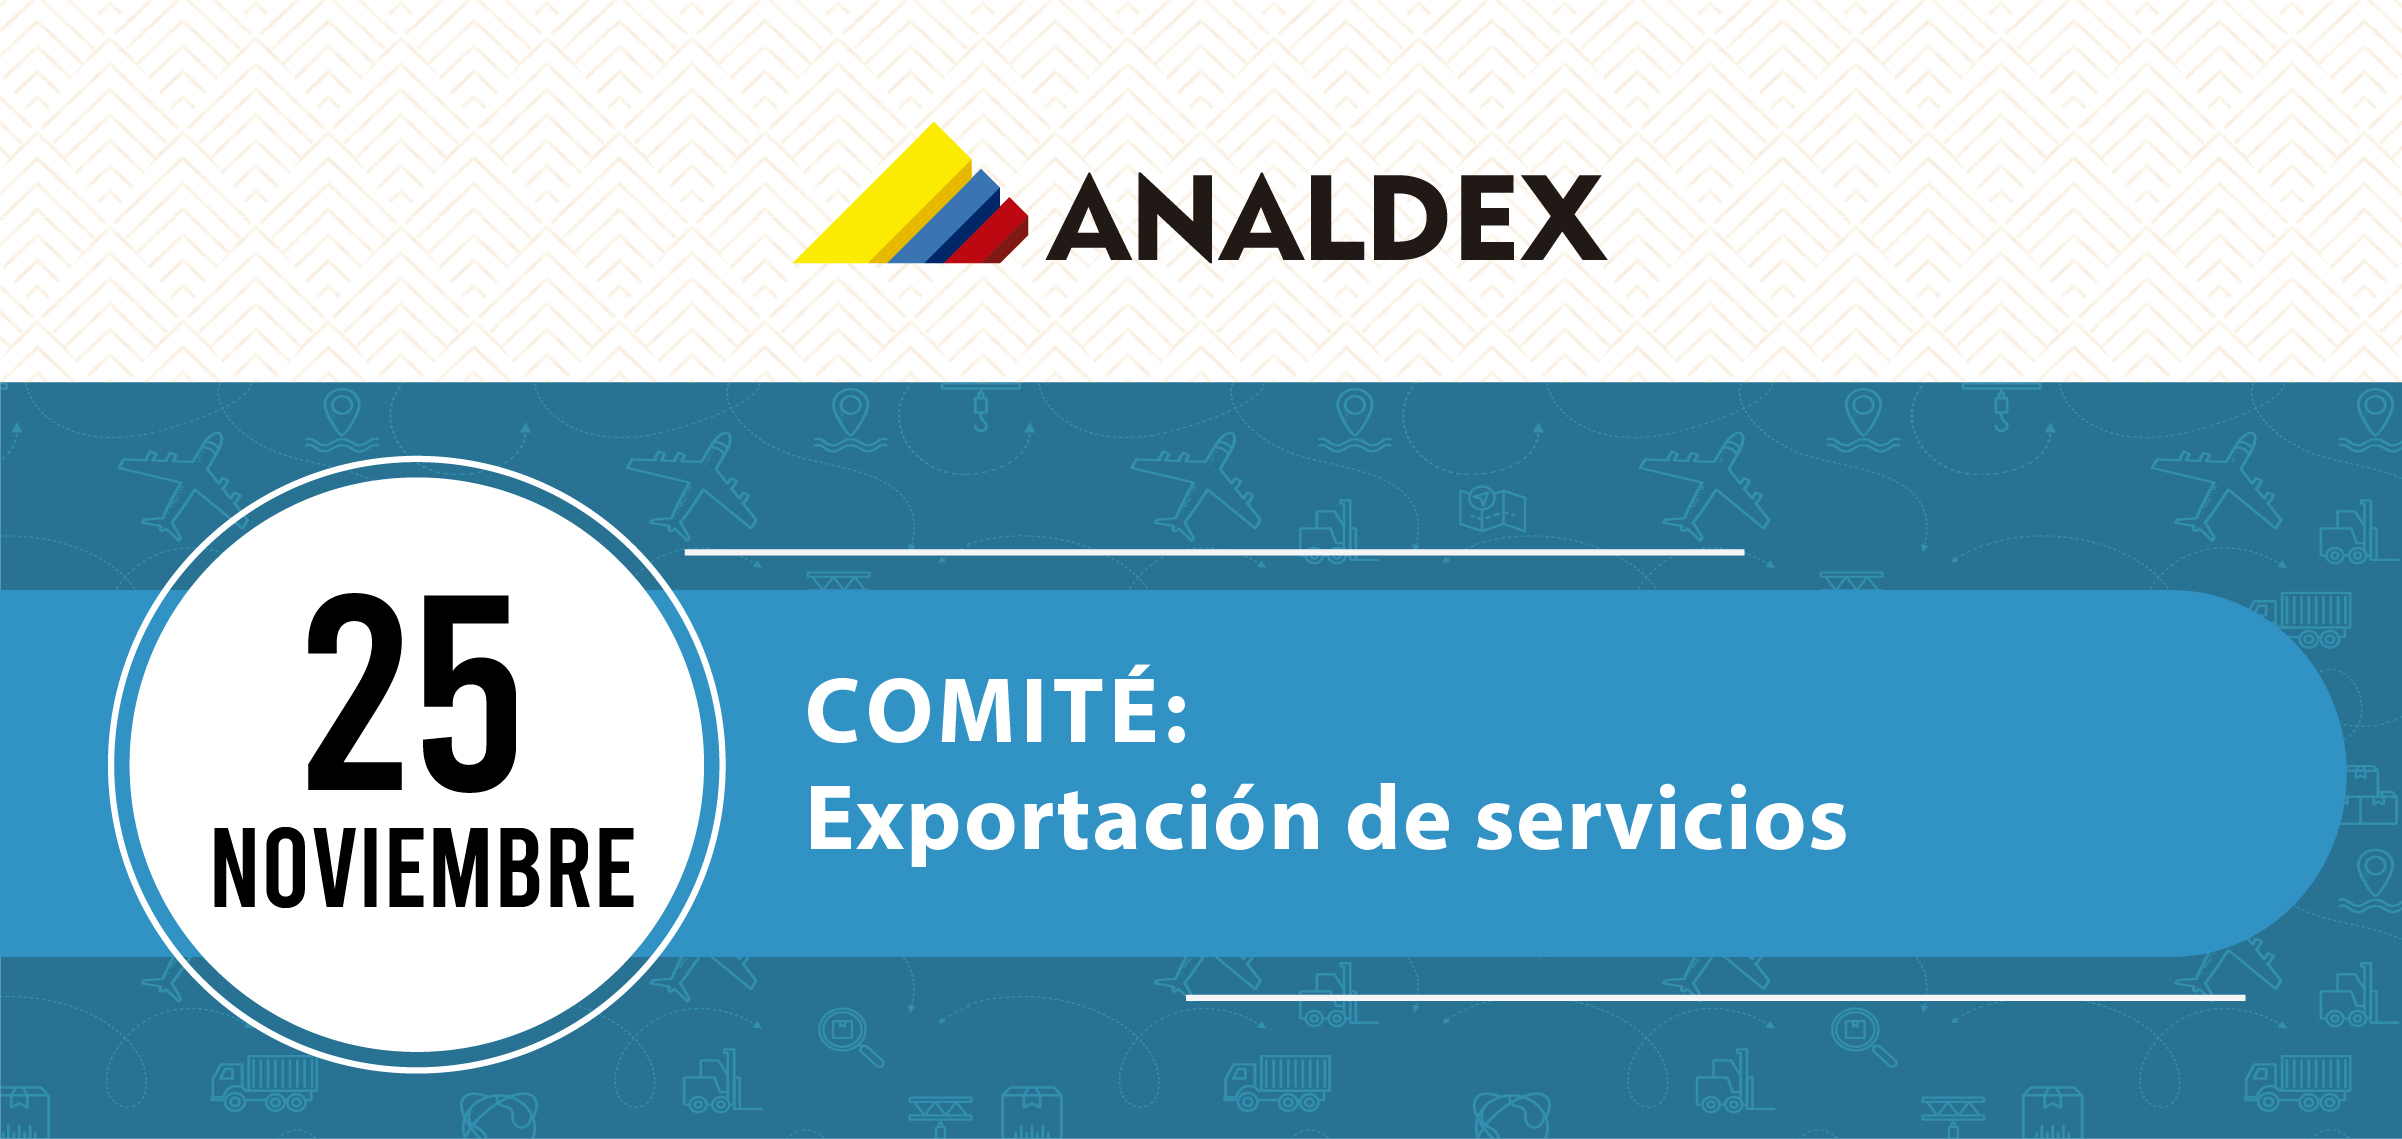 Comité: Exportación de servicios